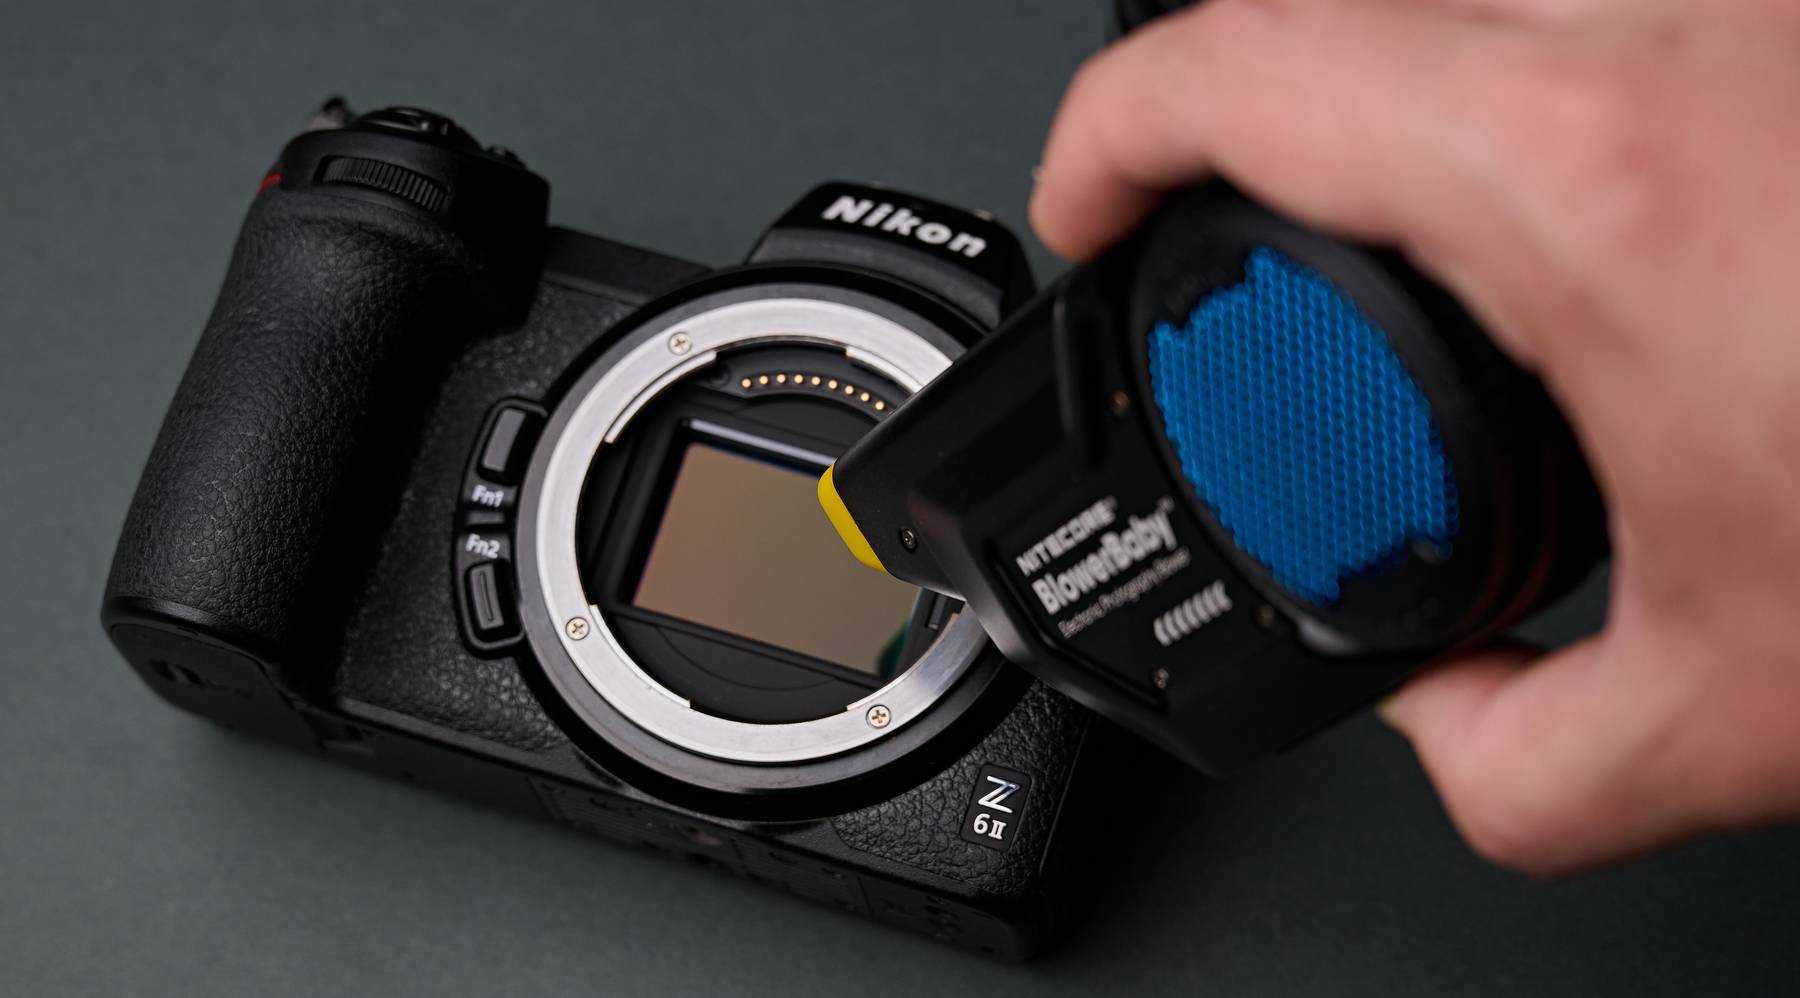 Nikon d3s - nikon d3s